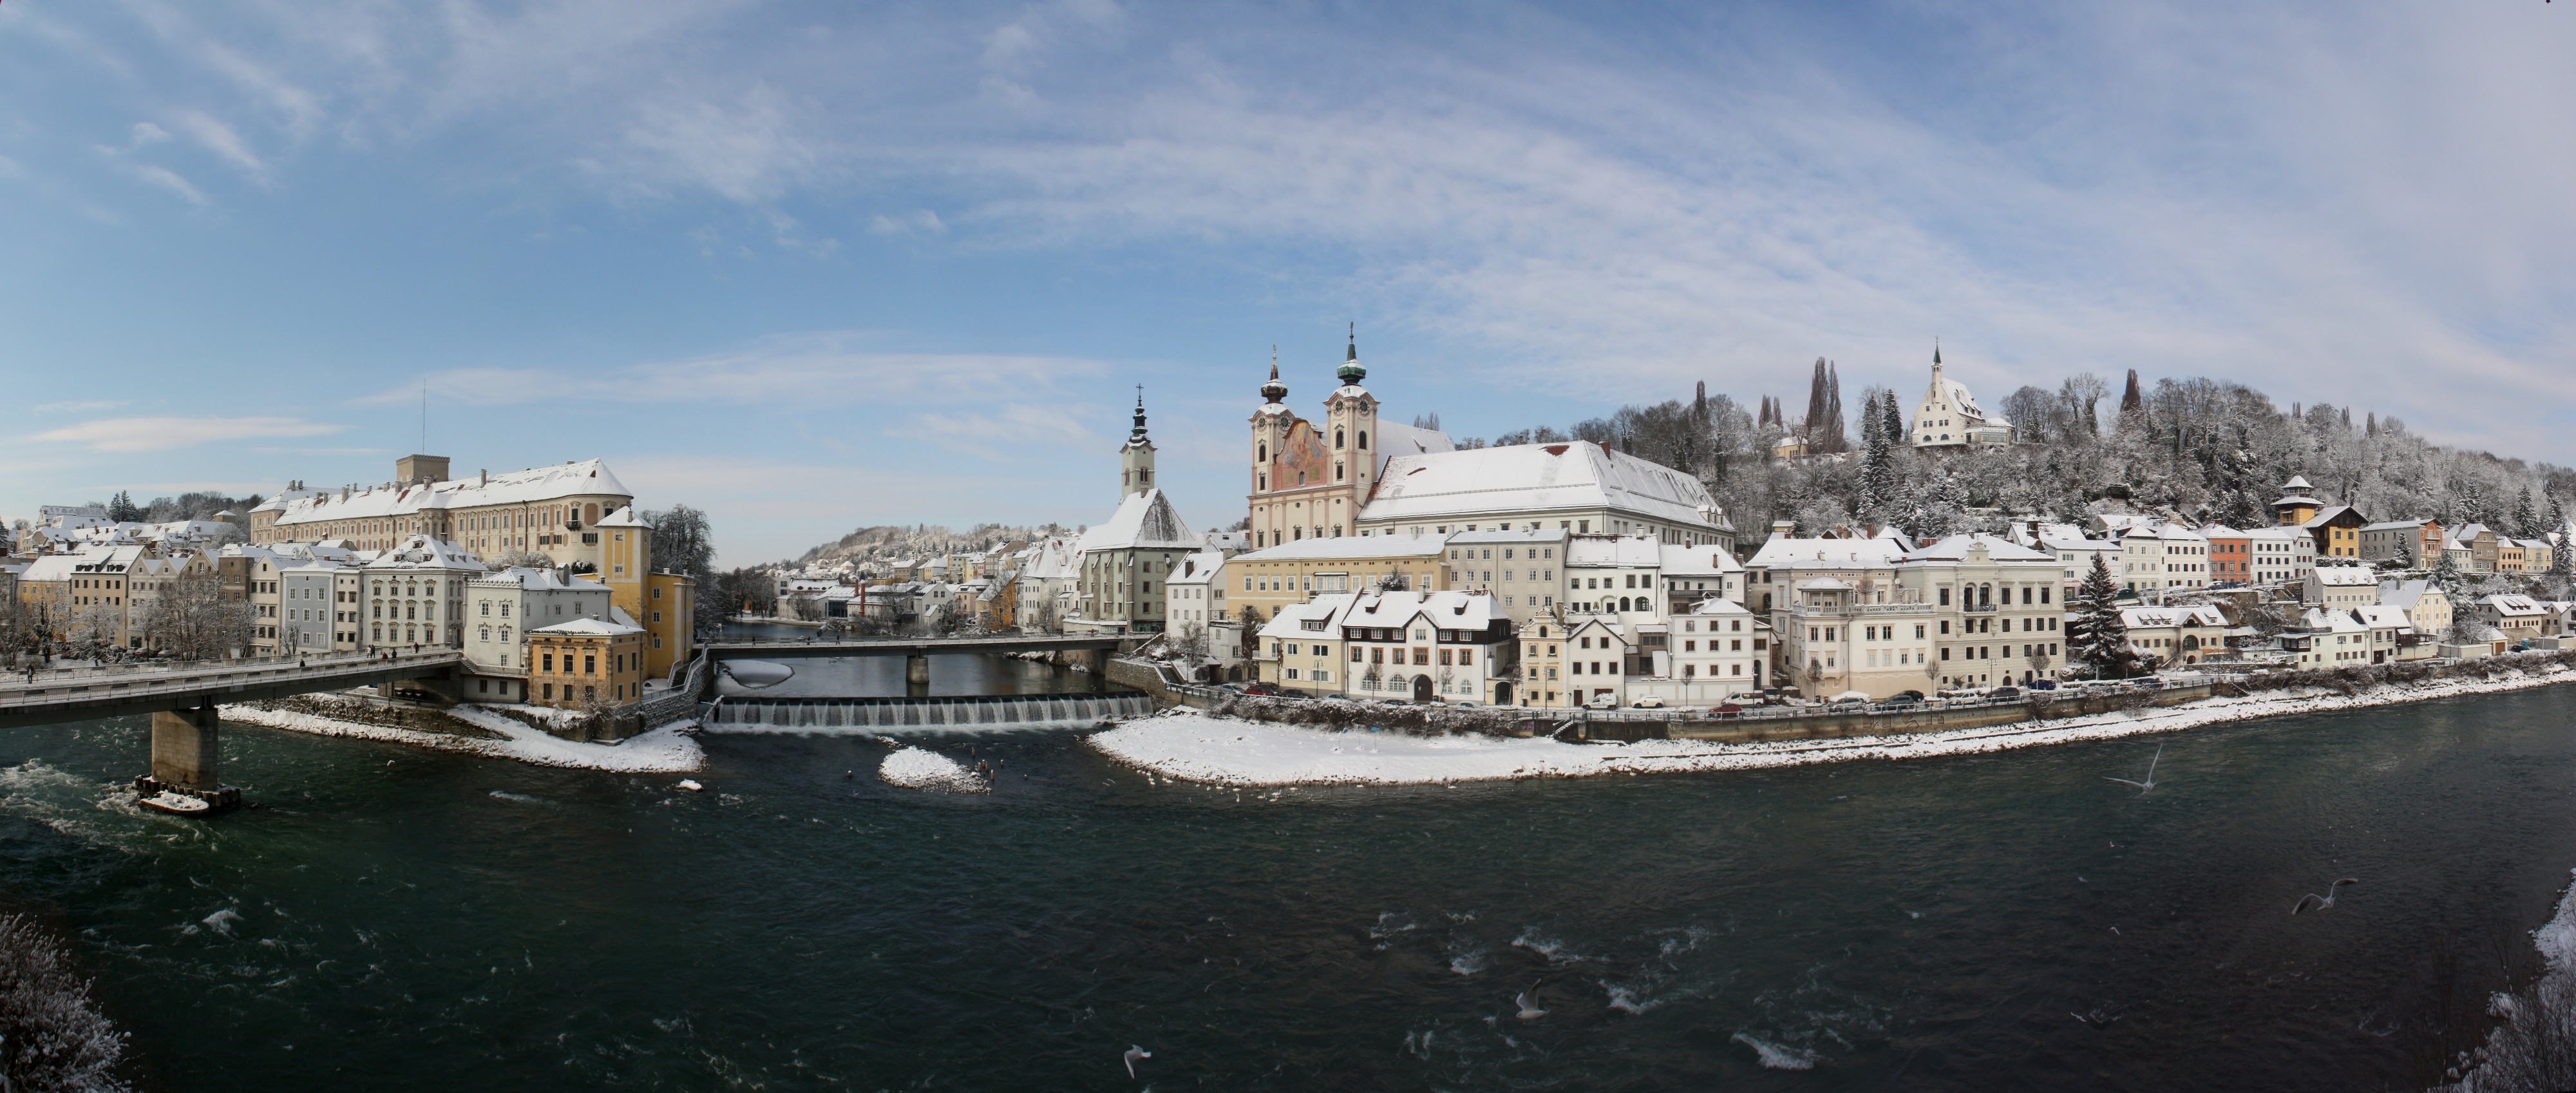 Steyr Panorama Winter